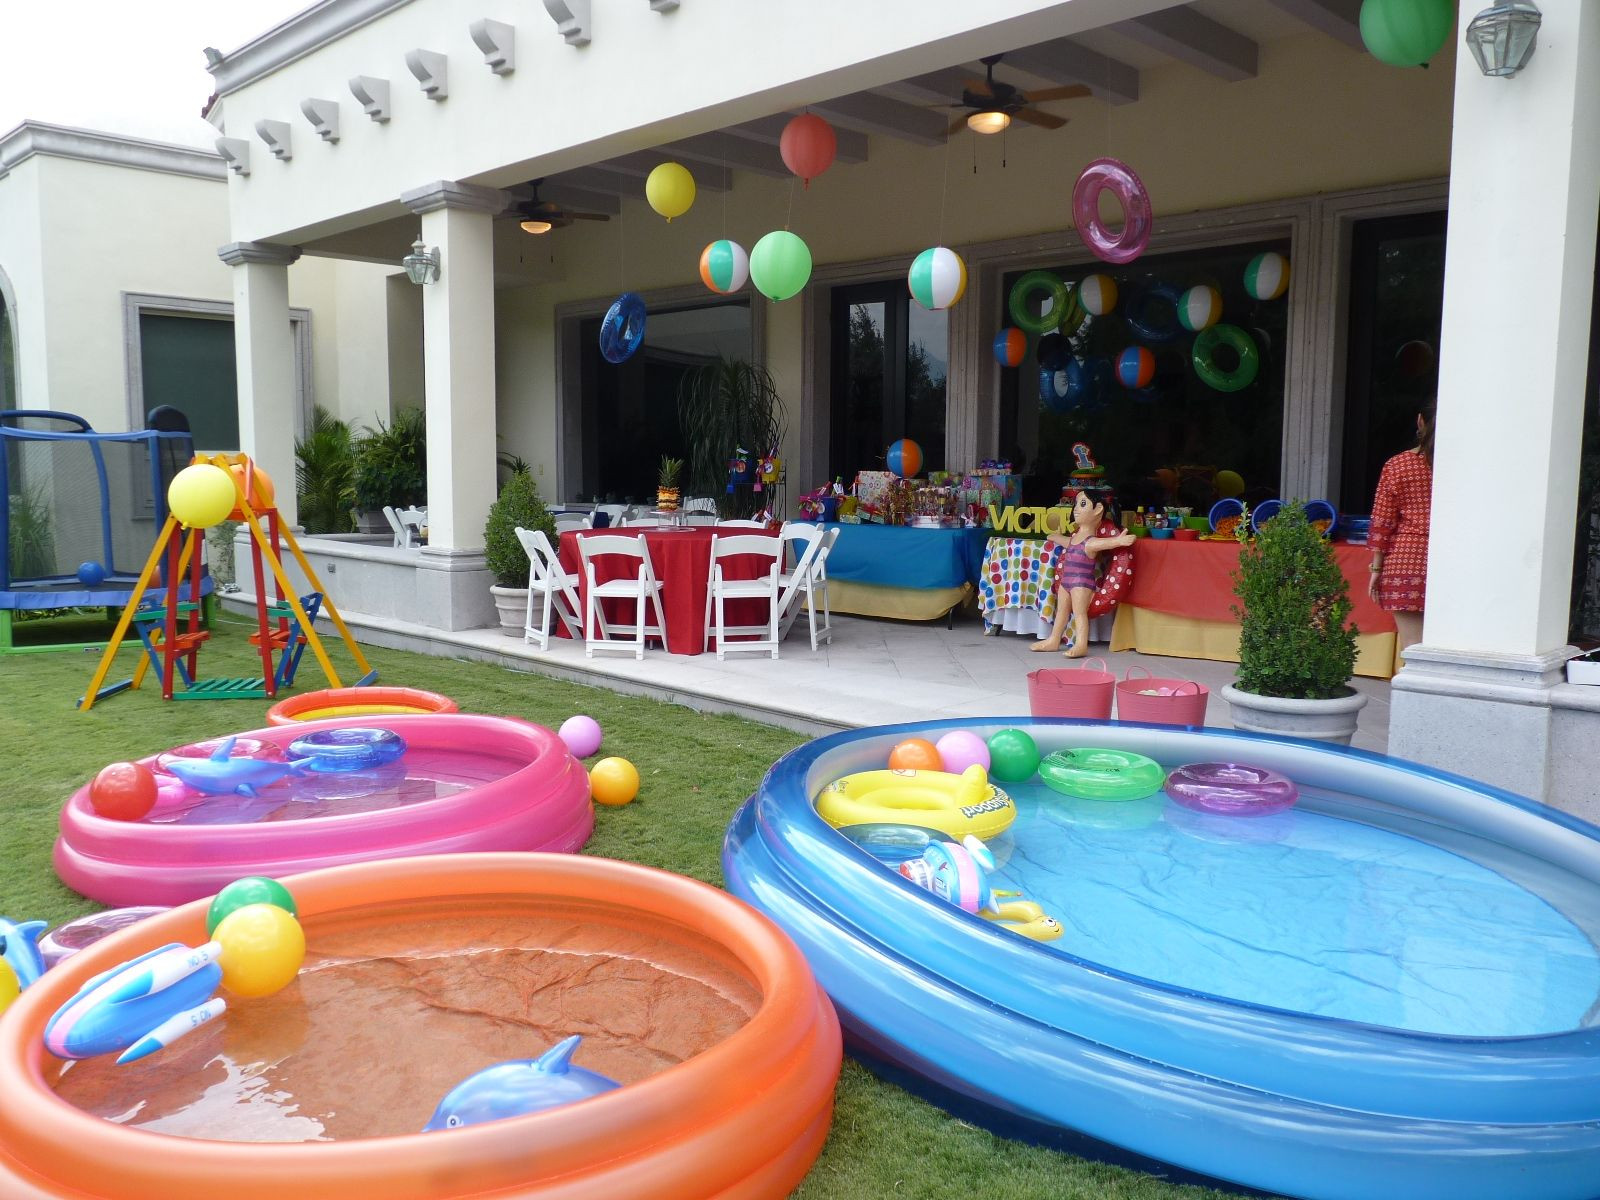 Ideas For Backyard Girls Birthday Pool Party
 Layout backyard 1 kid pool 2 medium pools 1 large pool